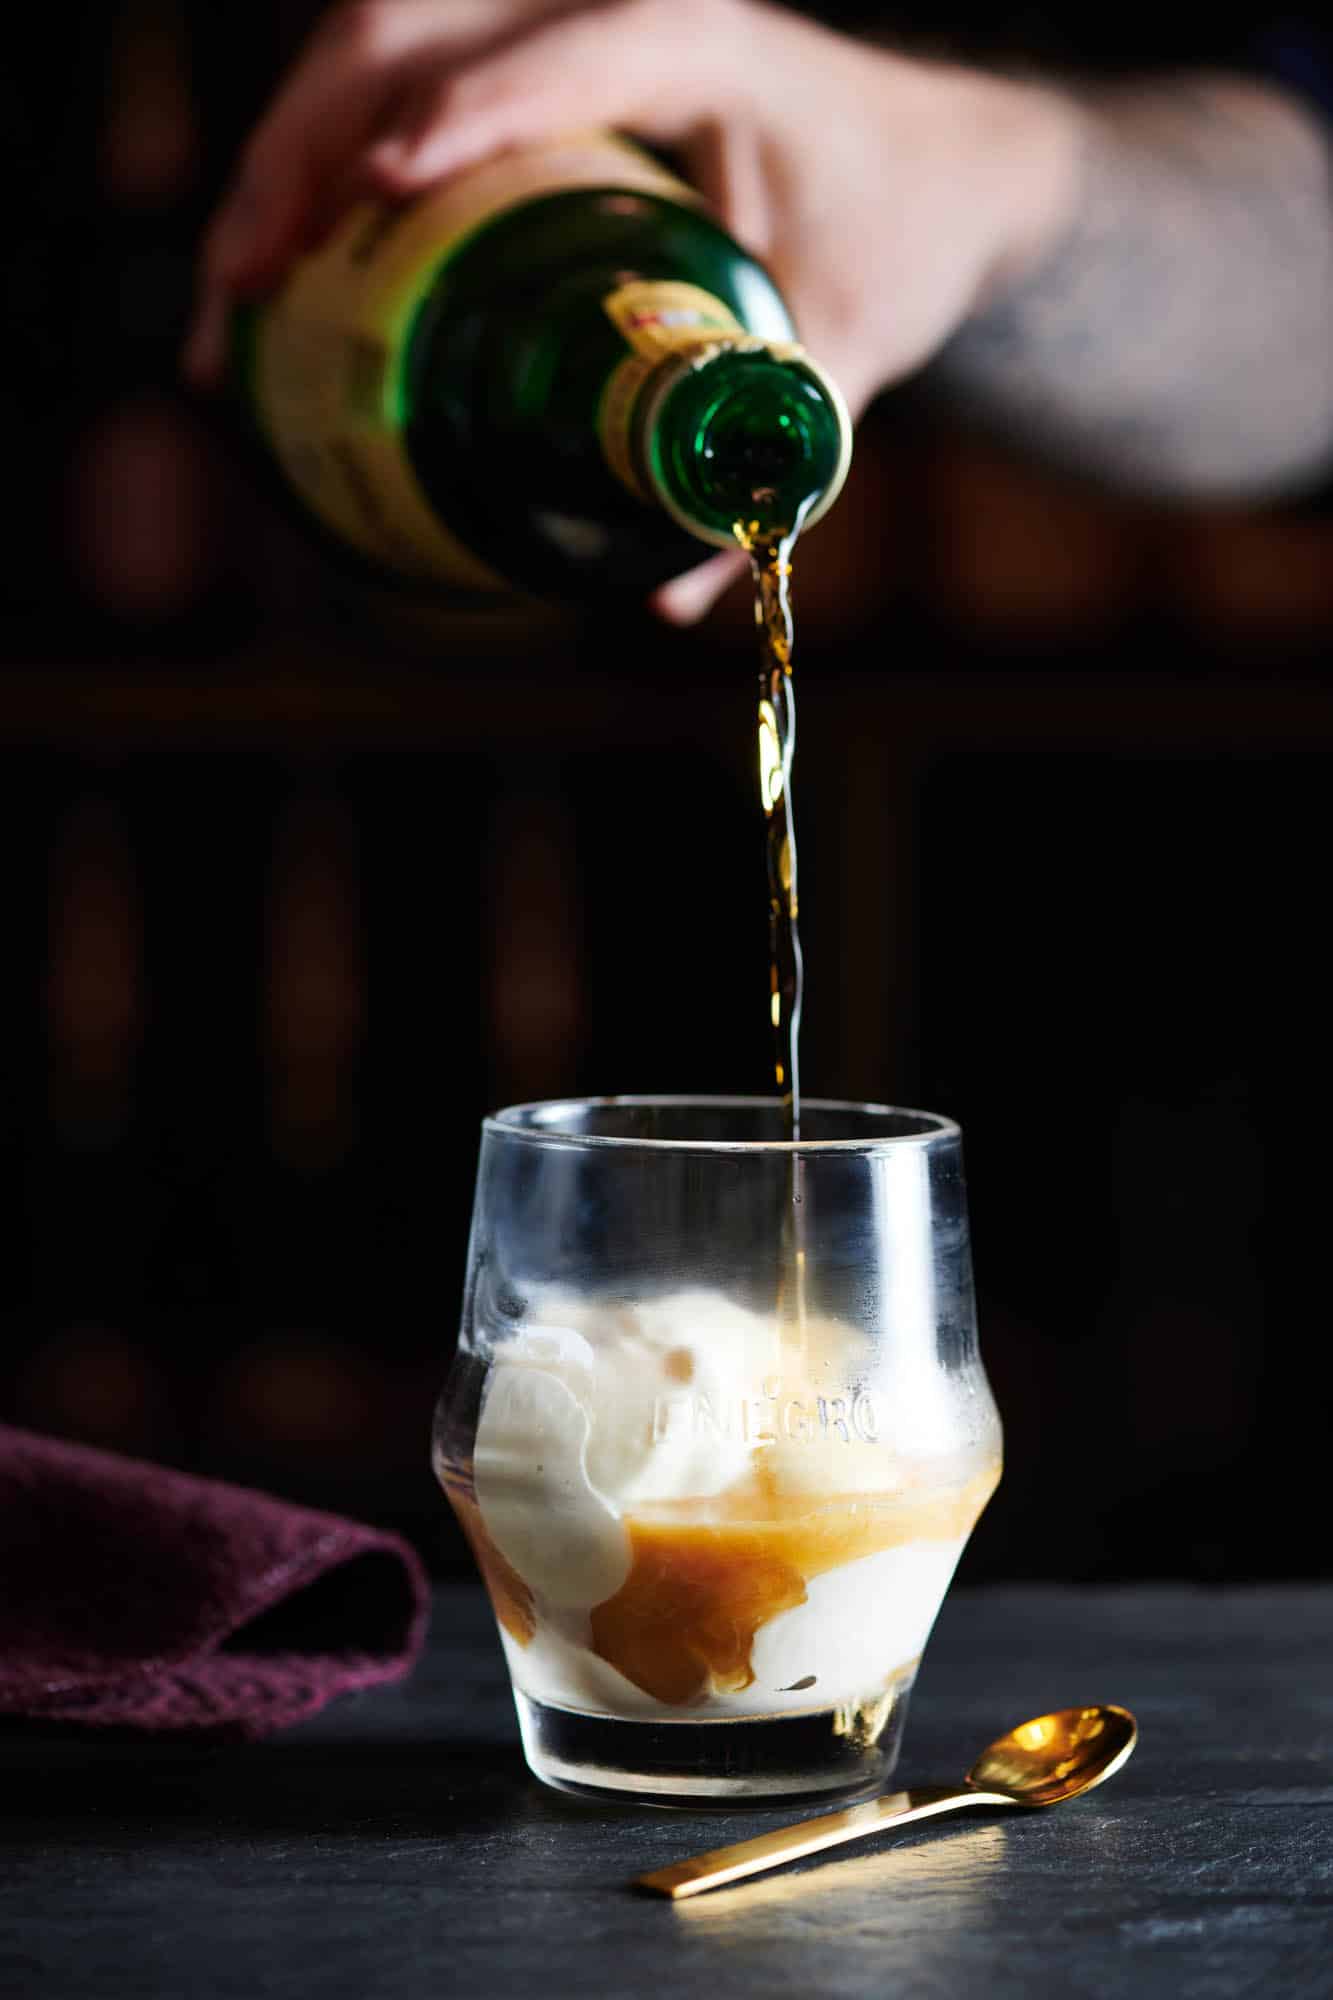 cocktail photography of Amaro Montenegro over ice cream